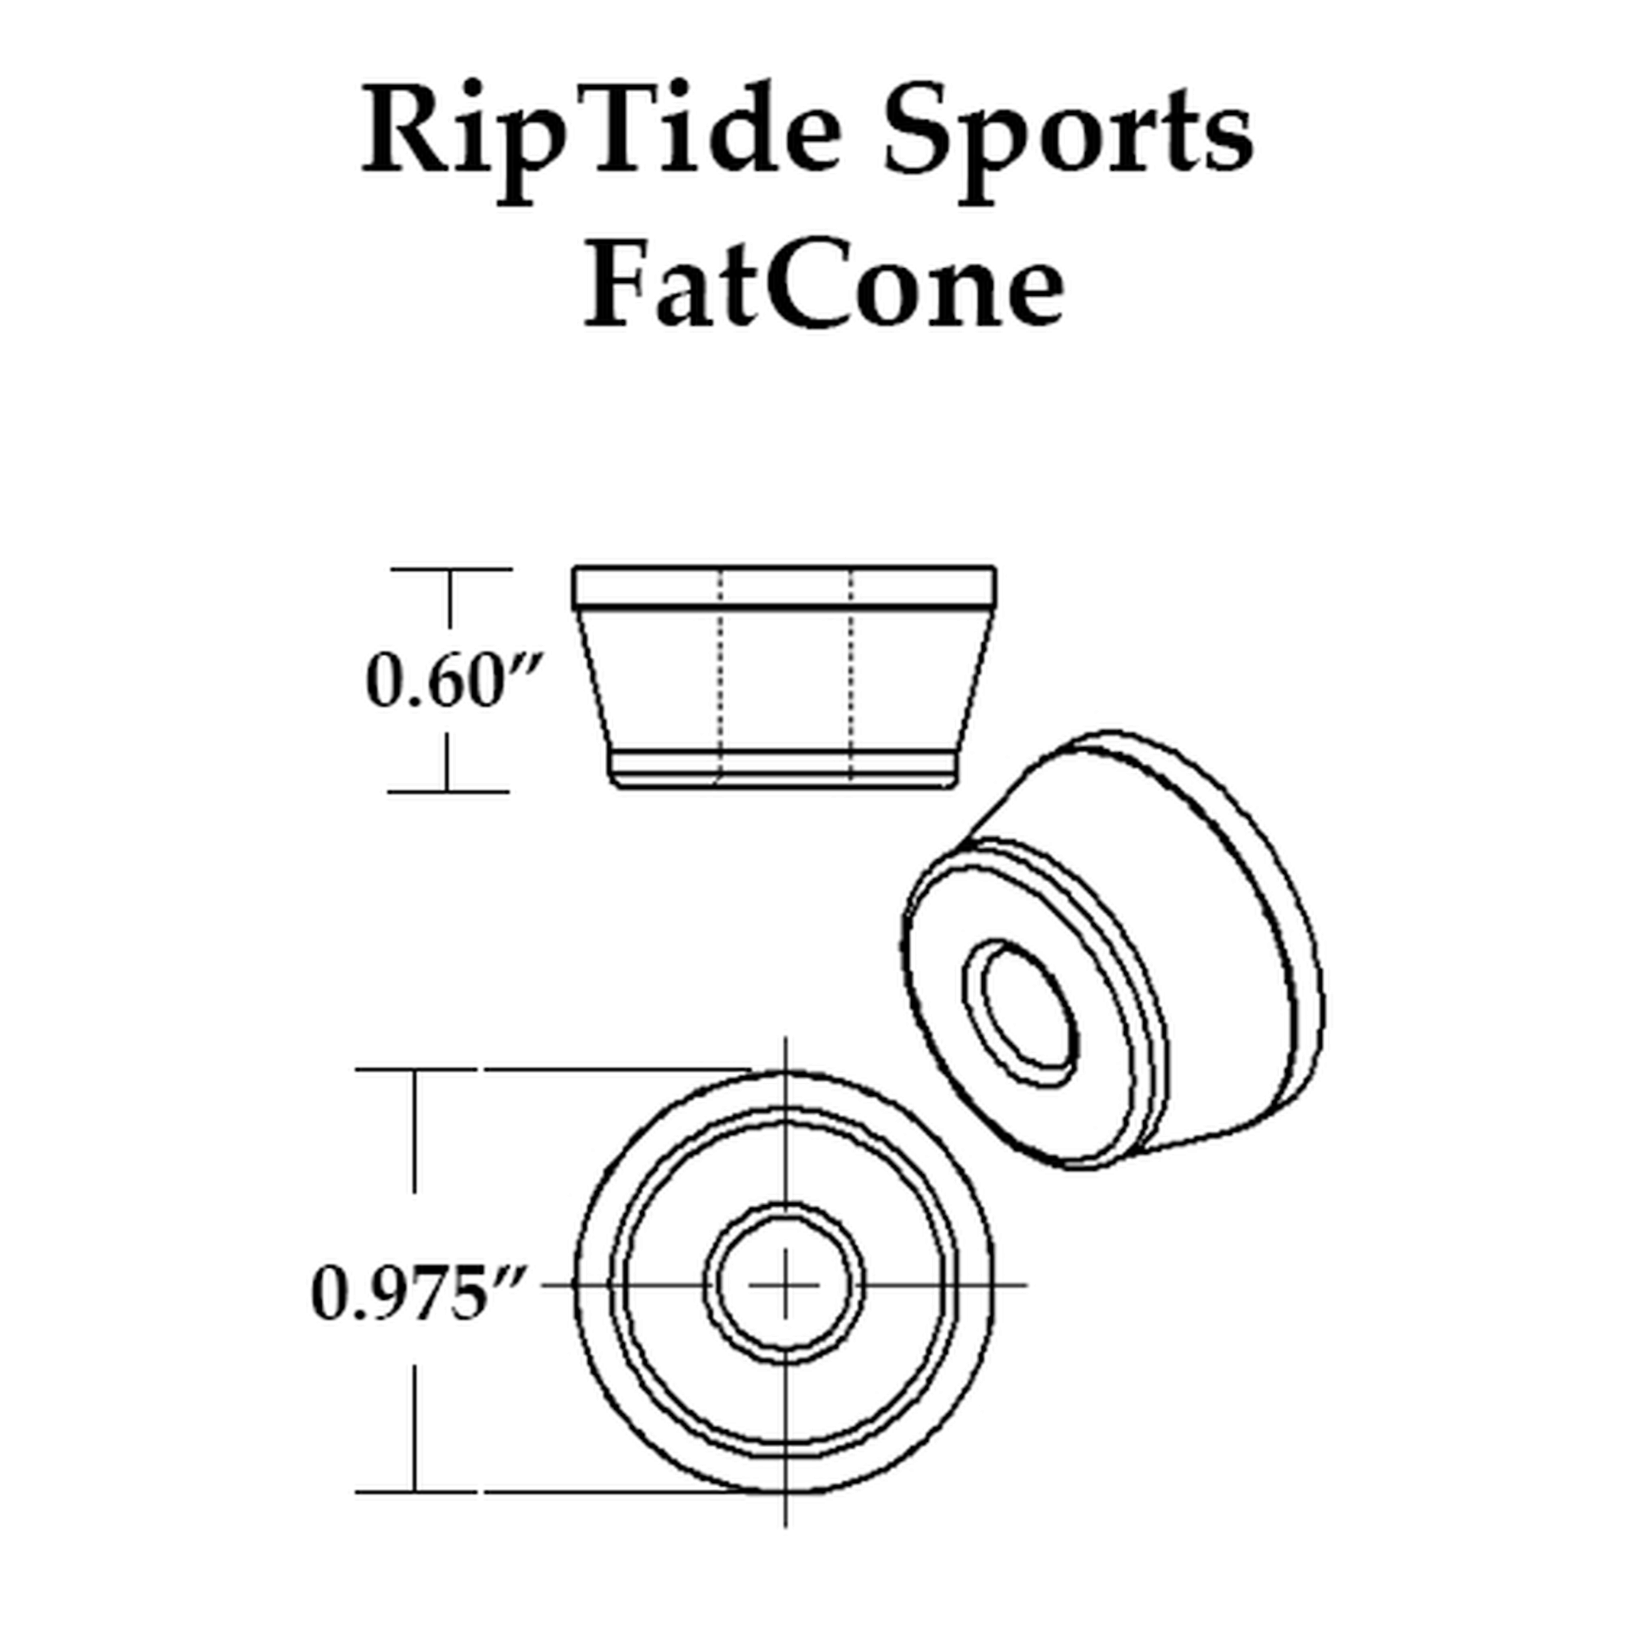 Riptide Sports WFB FatCone